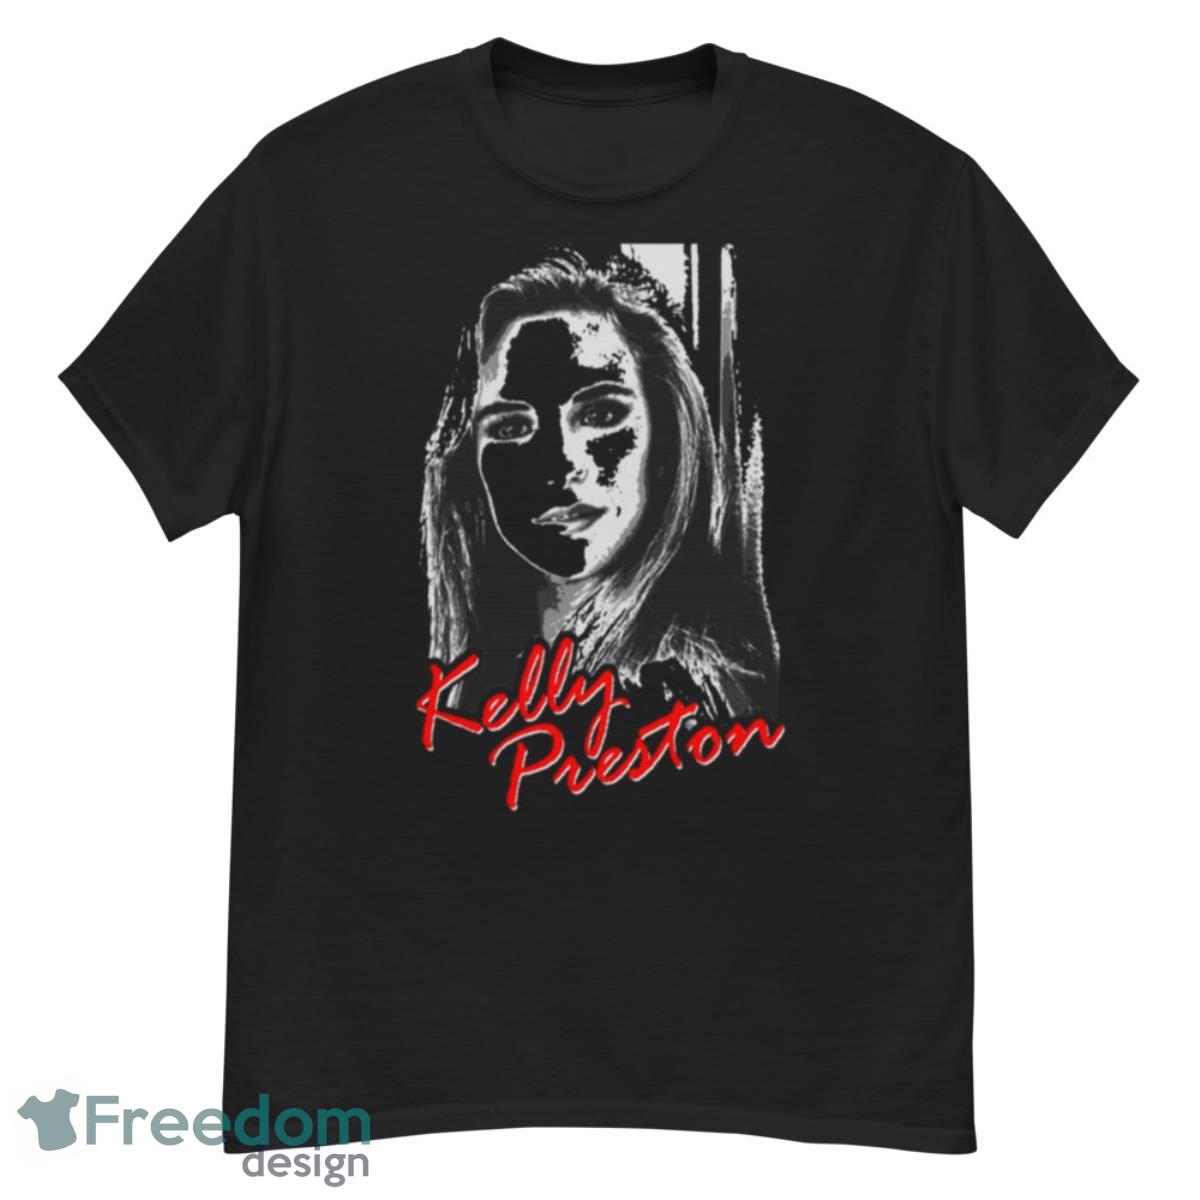 Actress Kelly Preston Art Shirt - G500 Men’s Classic T-Shirt